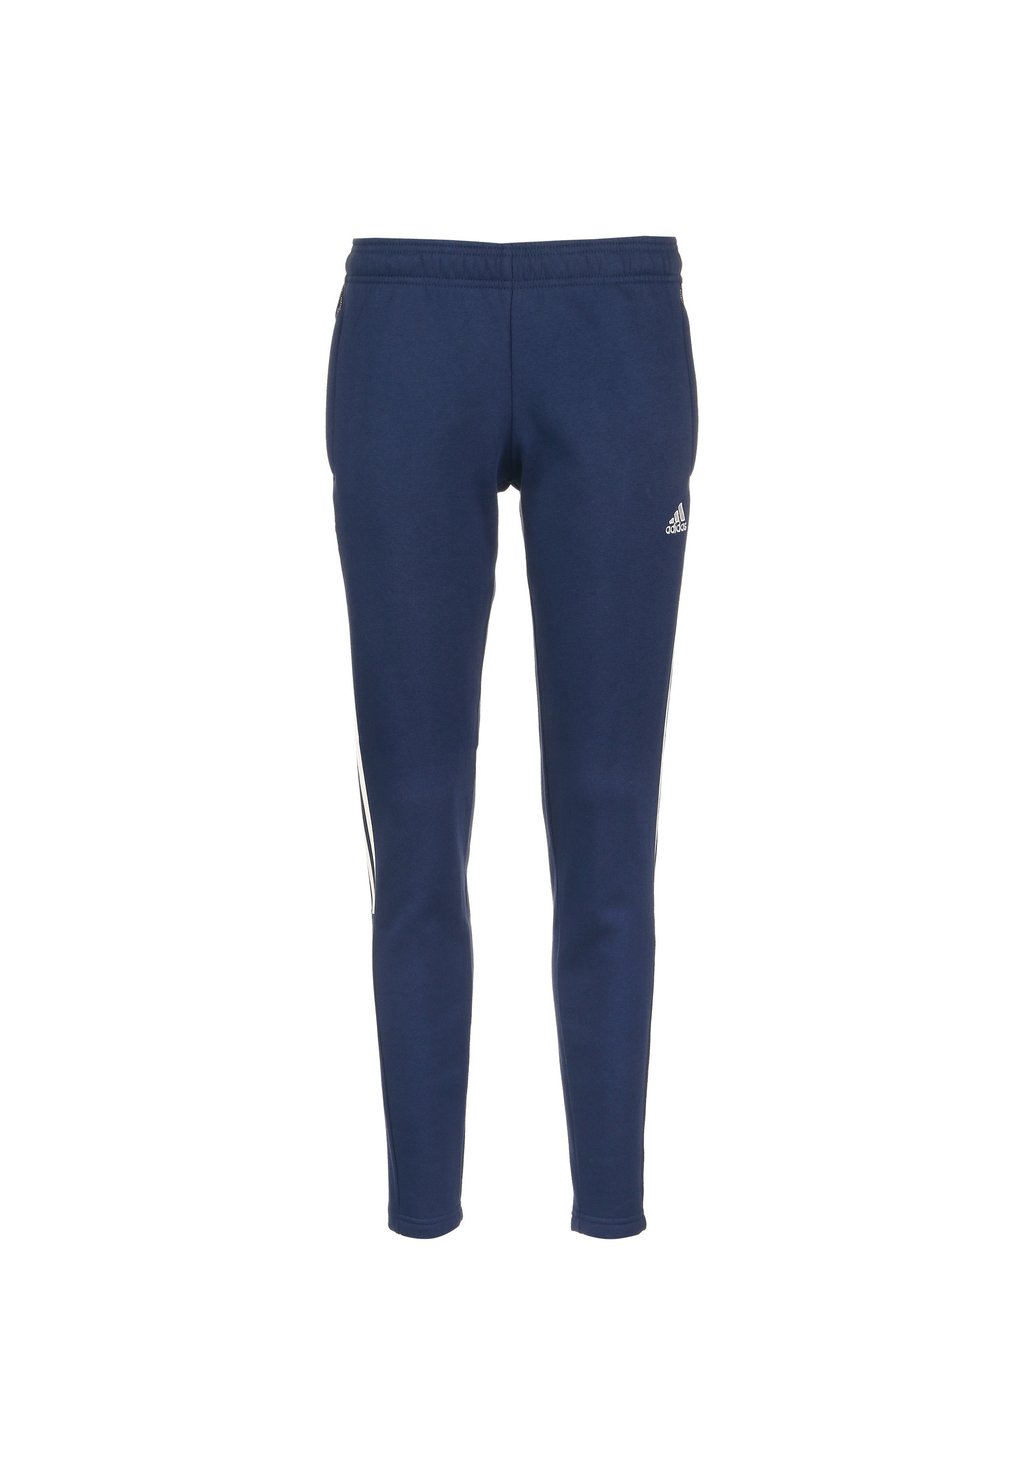 Спортивные брюки темно-синего цвета Adidas, темно-синий navy blue mist pattern 6 s coffee team